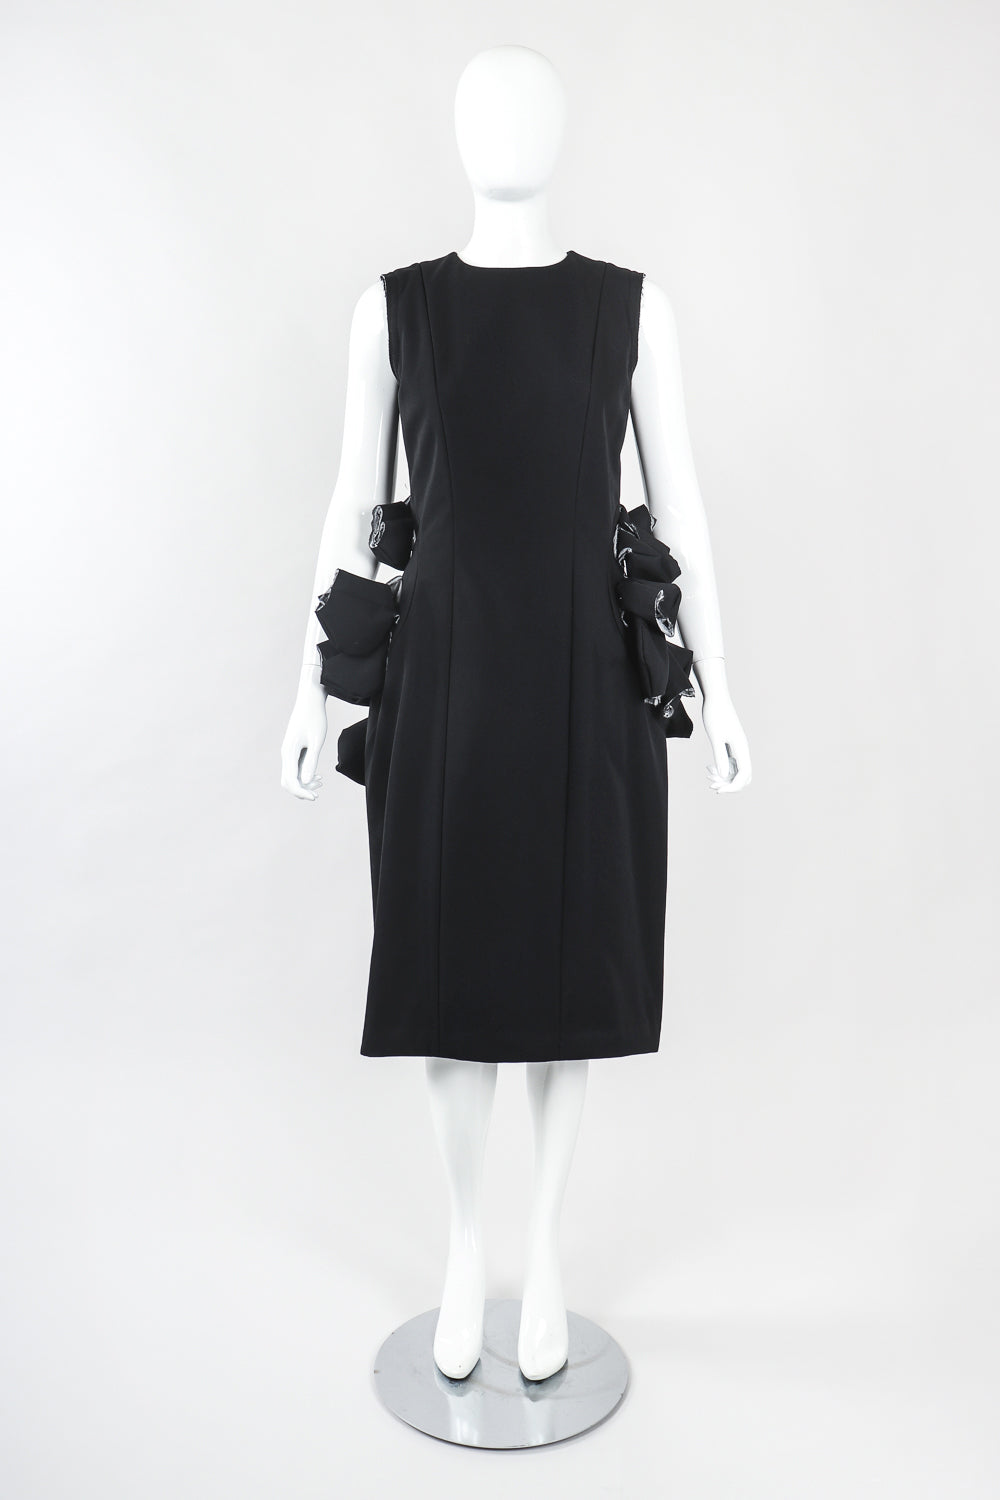 Recess Designer Consignment Vintage Comme des Garçons Japanese Avant Garde Padded Puff Sheath Dress Los Angeles Resale